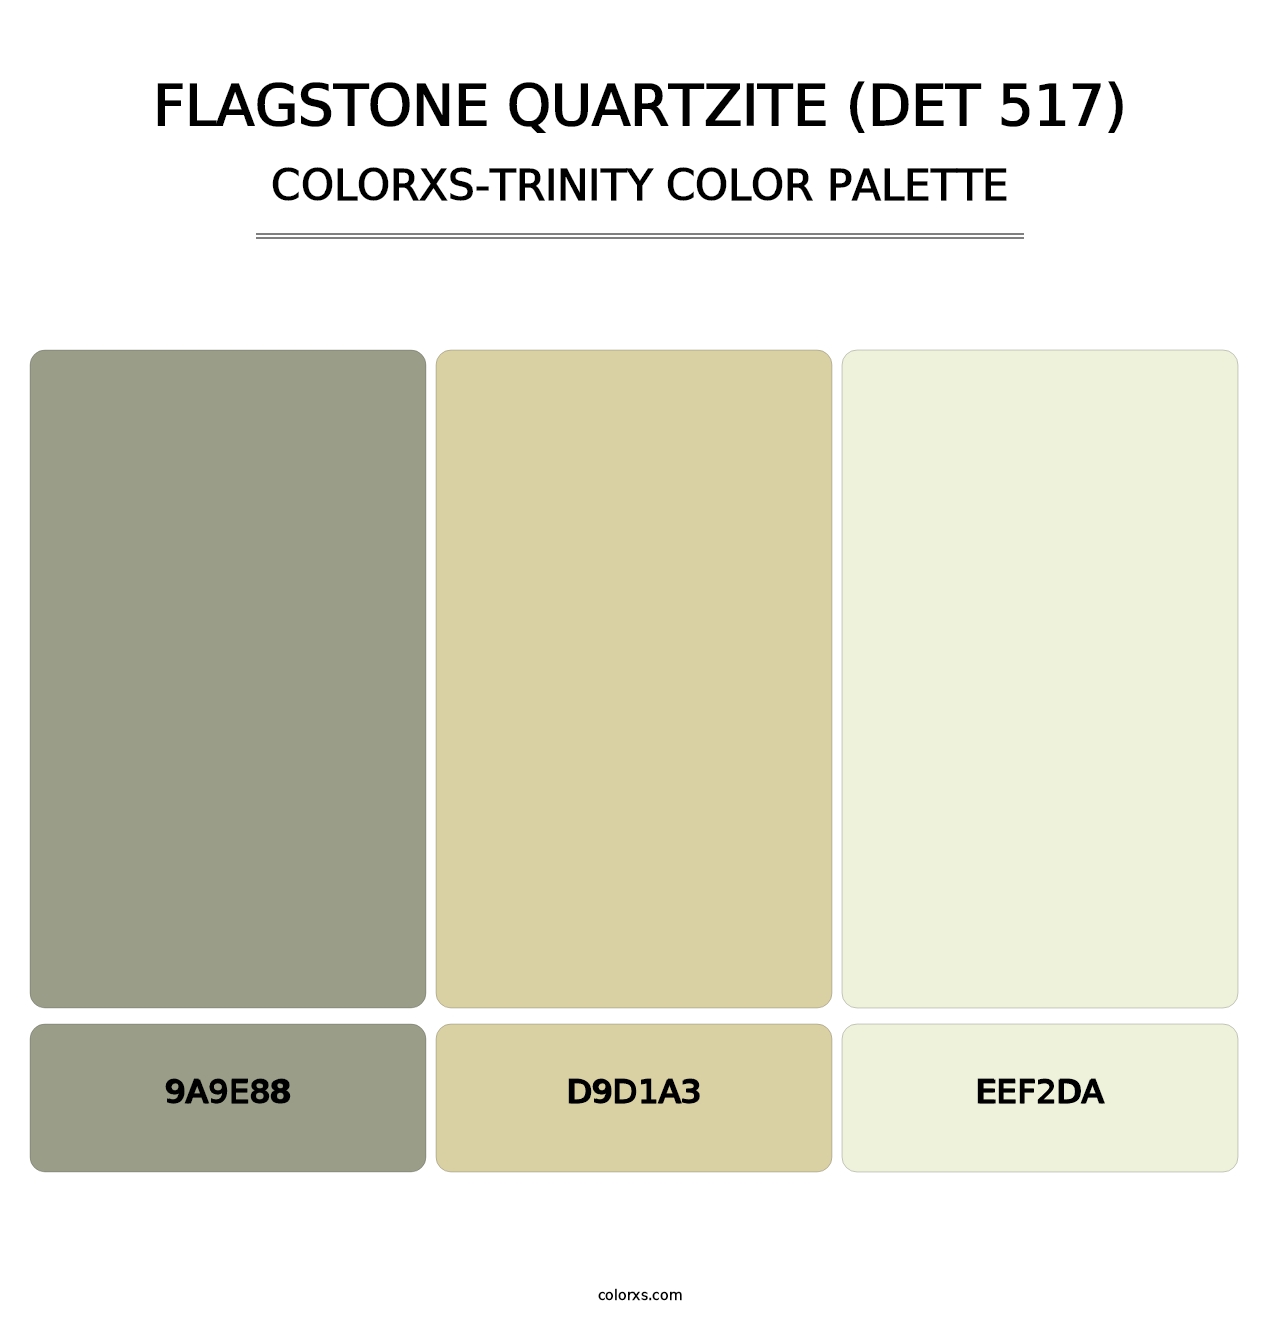 Flagstone Quartzite (DET 517) - Colorxs Trinity Palette